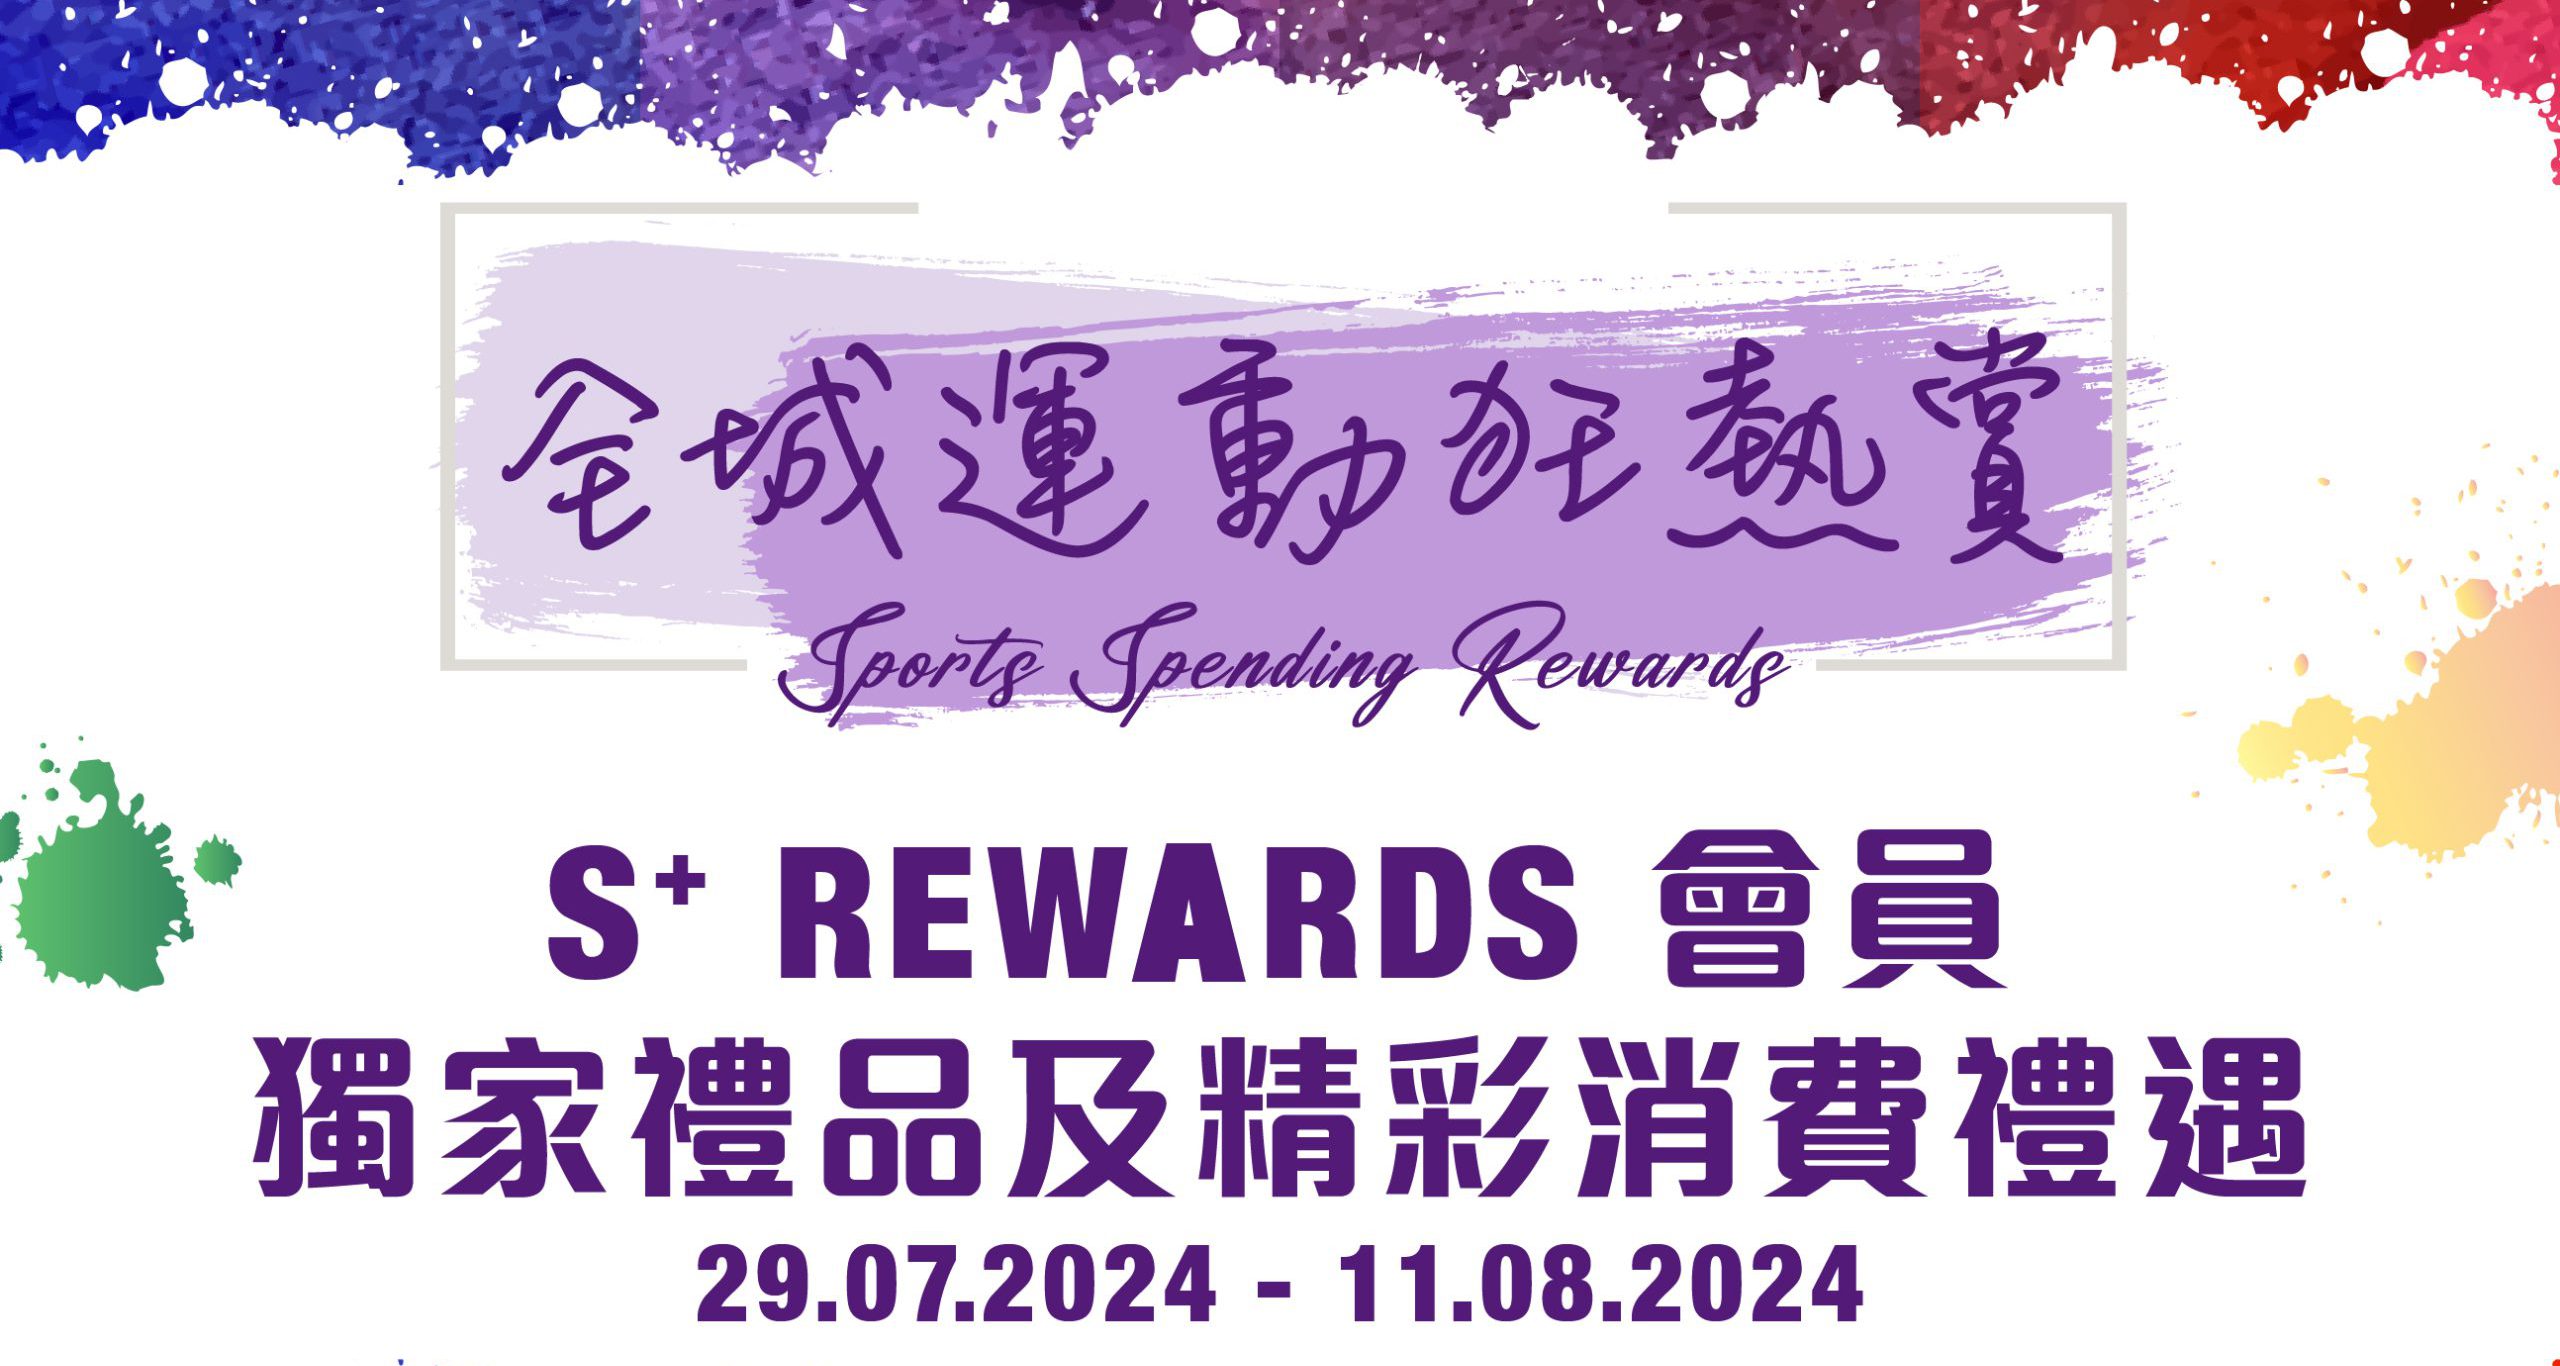 Sino Malls “Sports Spending Rewards” 